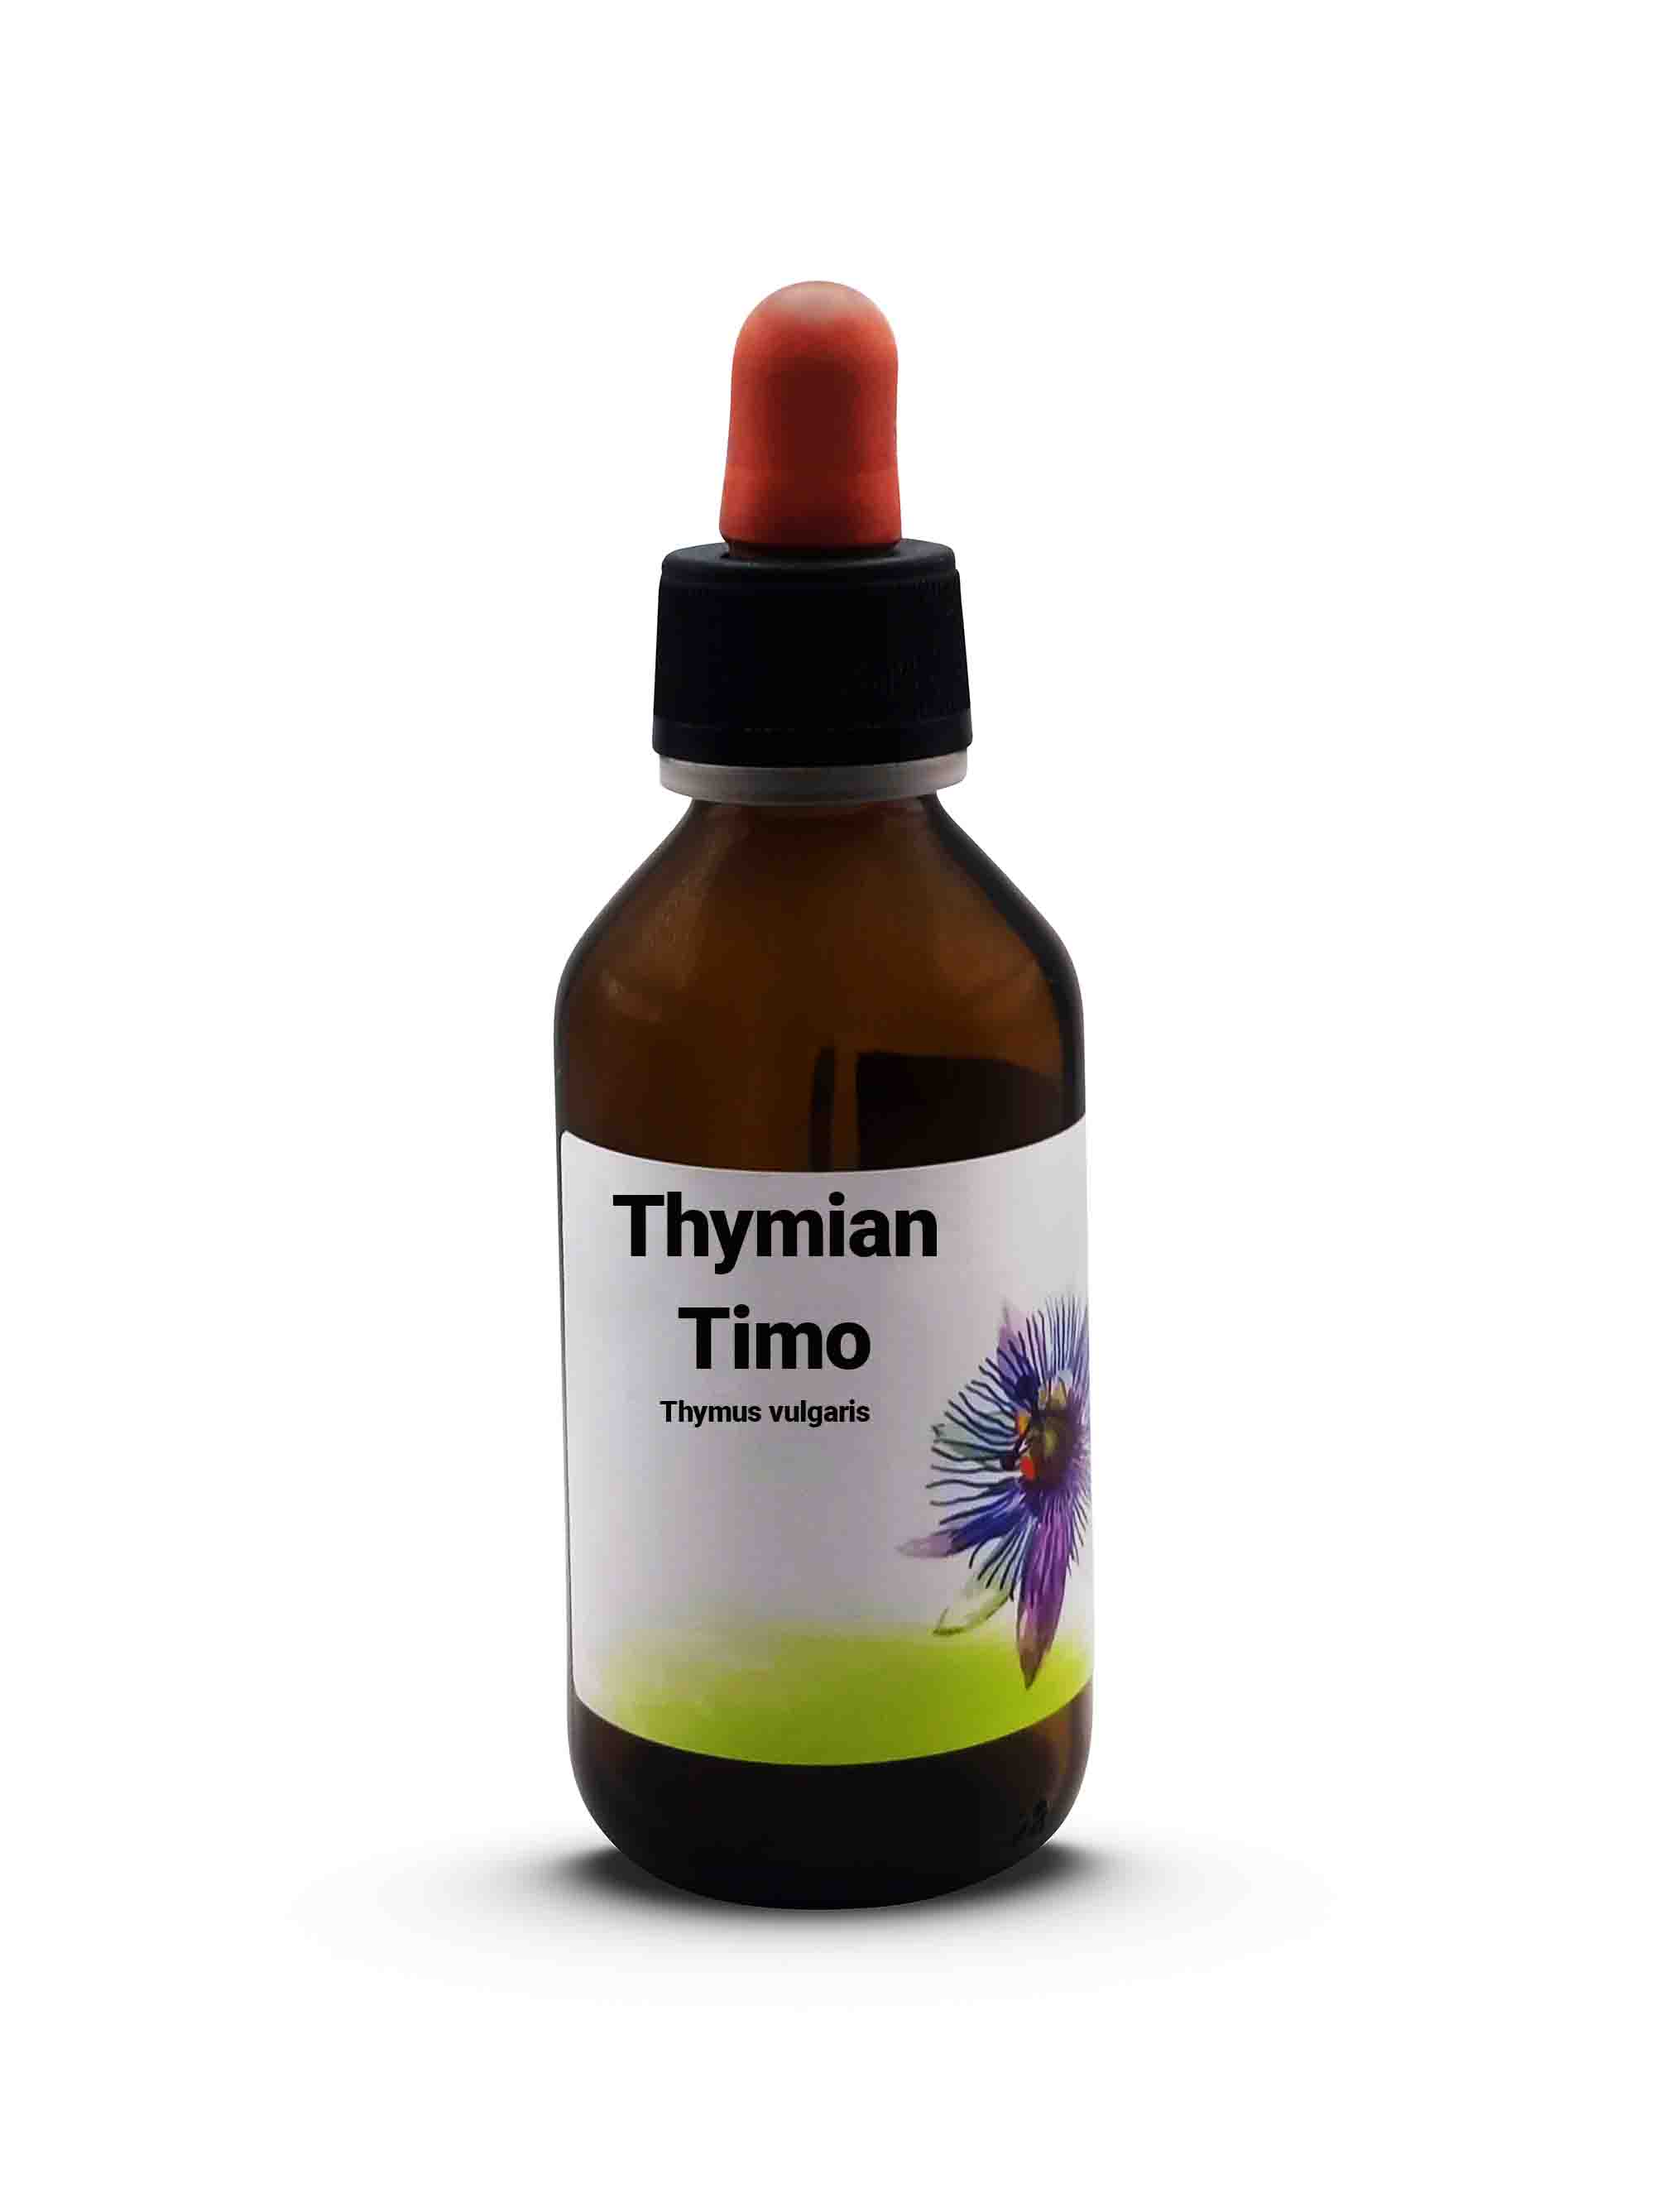 Thymian Timo Thymus vulgaris 100 ml